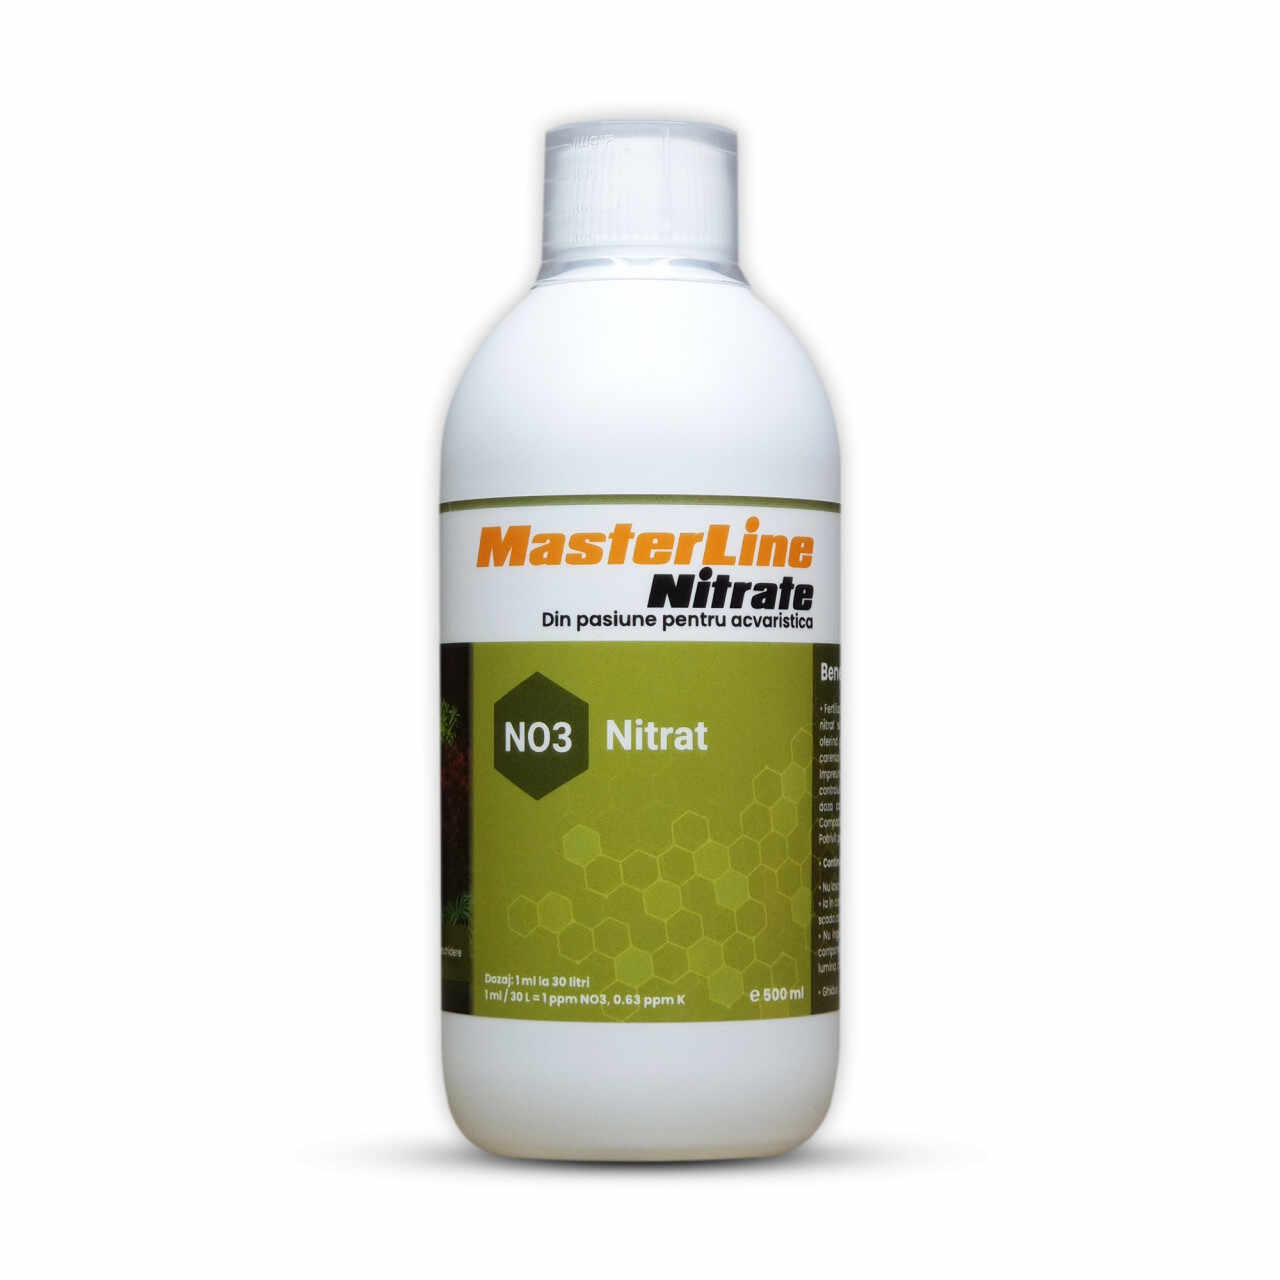 Masterline Nitrate, 500ml